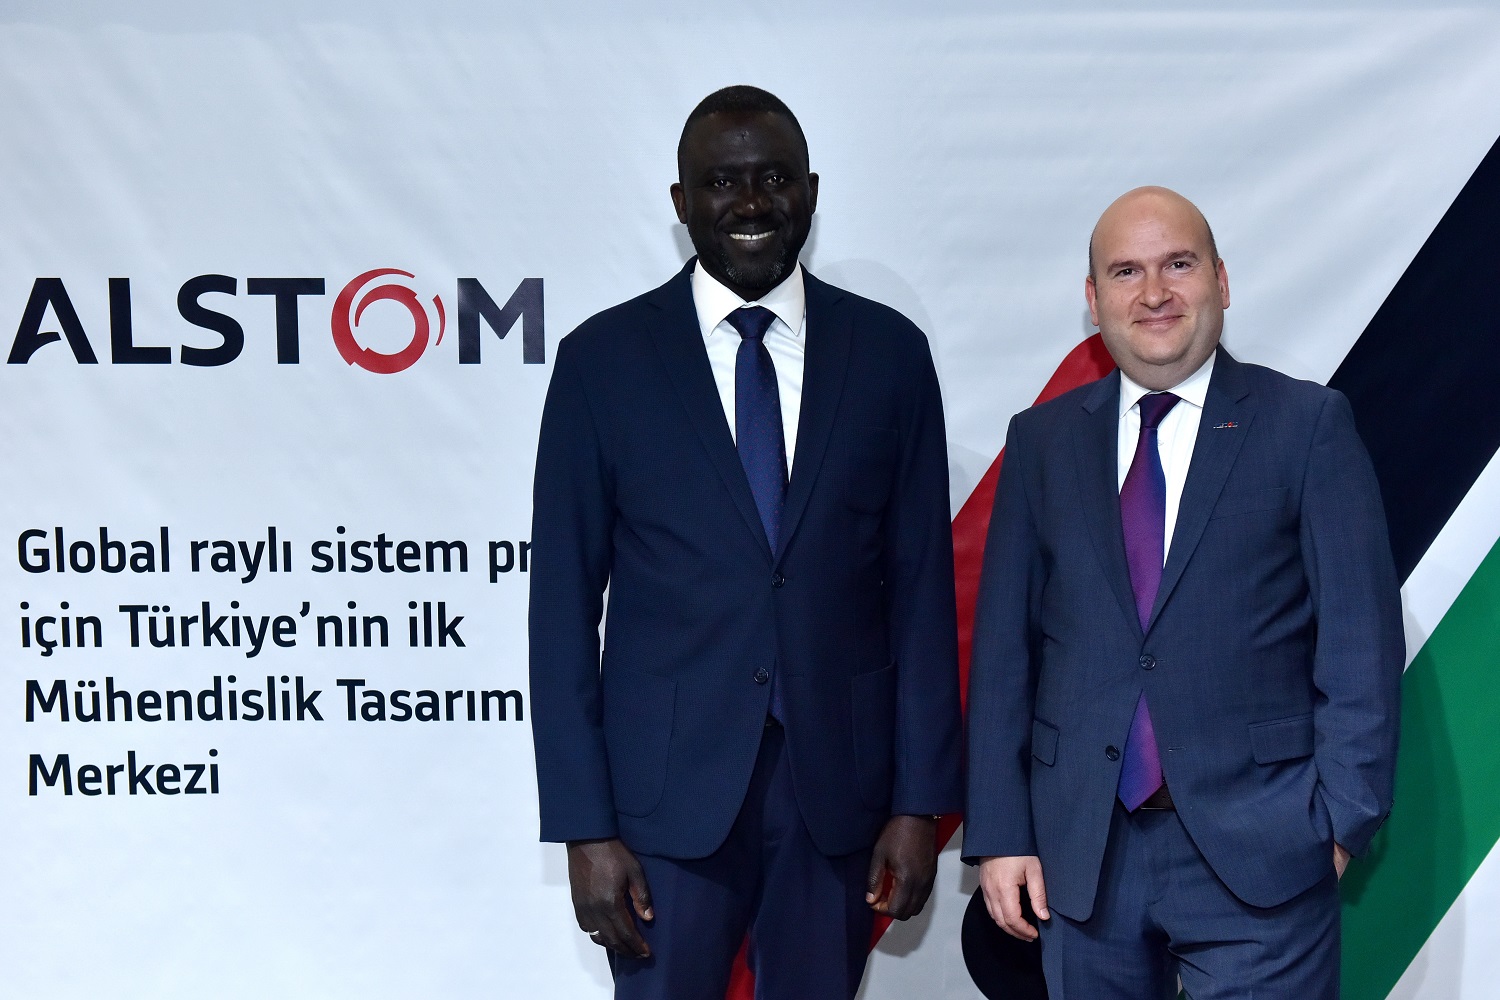 Alstom expands presence in Türkiye with new Engineering Centre at Teknopark Istanbul - Alstom